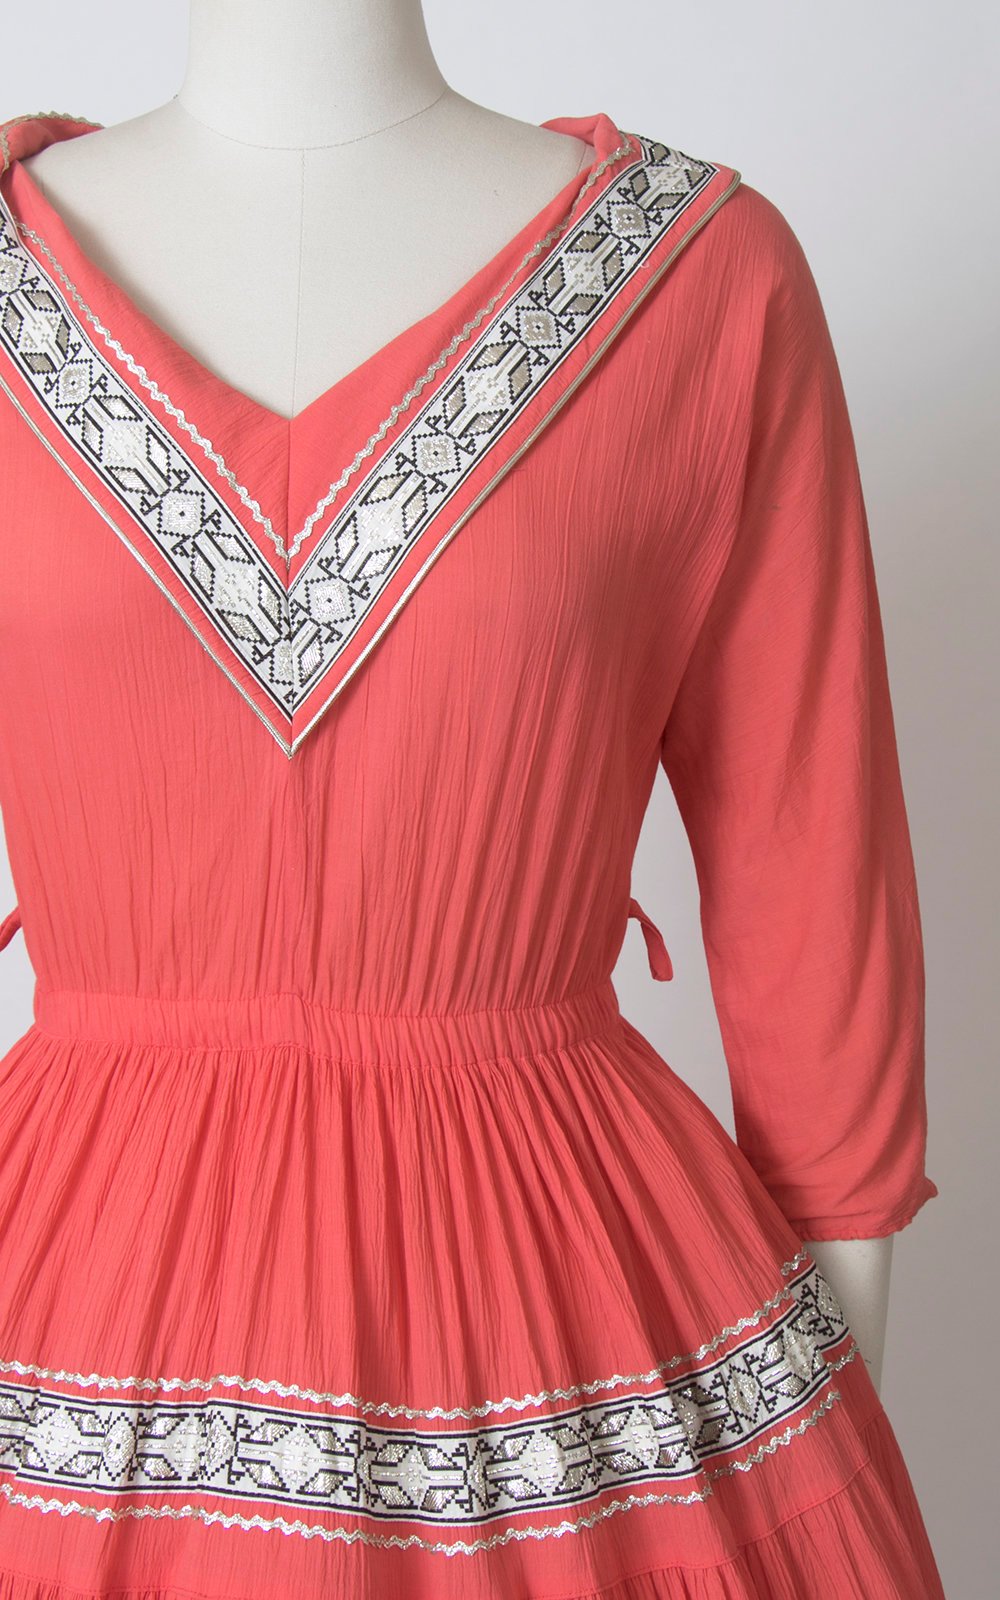 Vintage 1950s Dress | 50s Fiesta Patio Dress Pink Silver Ric Rac Southwestern Square Dance Swing Day Dress  (small/medium)